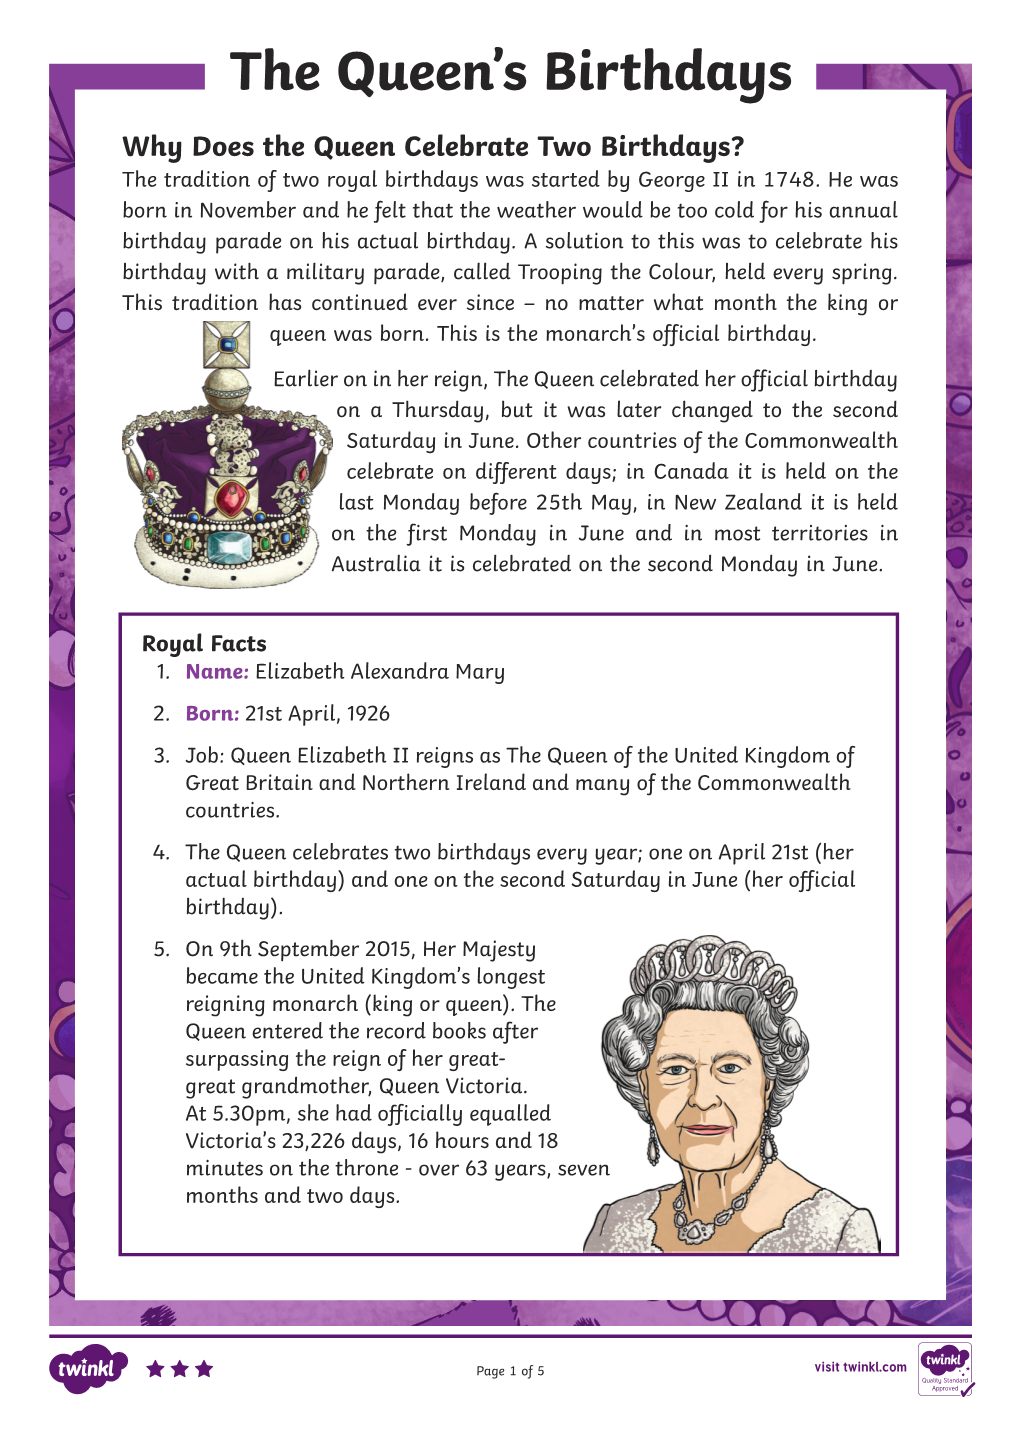 The Queen's Birthdays